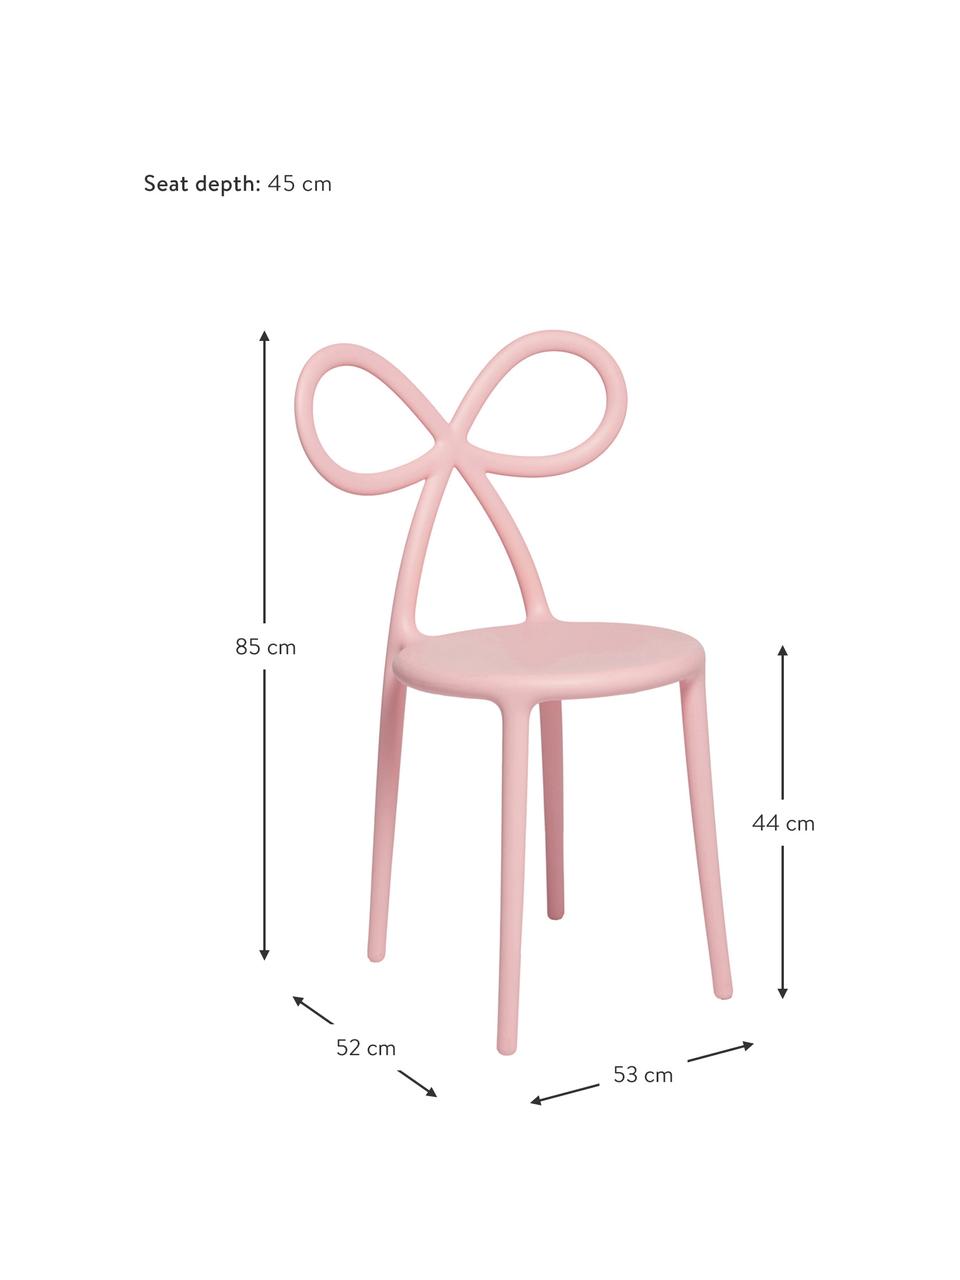 Kunststoffen stoel Ribbon in roze, Kunststof (polypropyleen), Roze, 53 x 85 cm